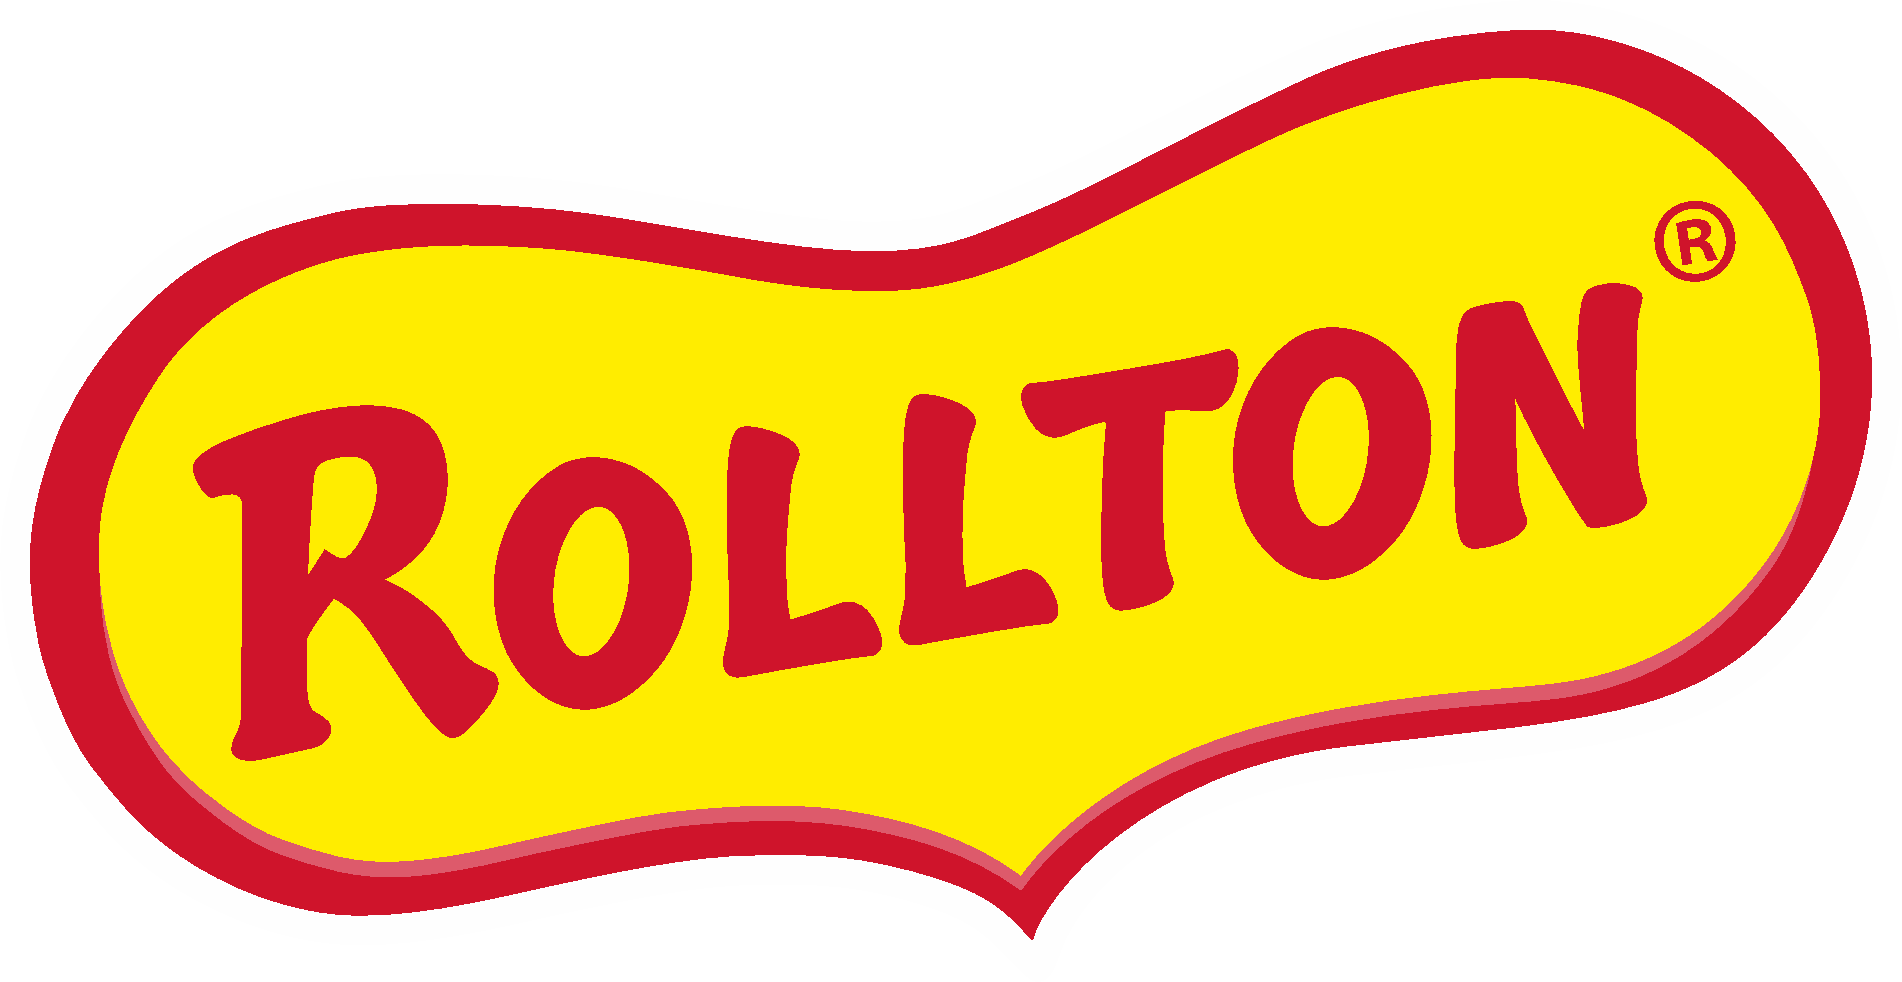 ROLLTON